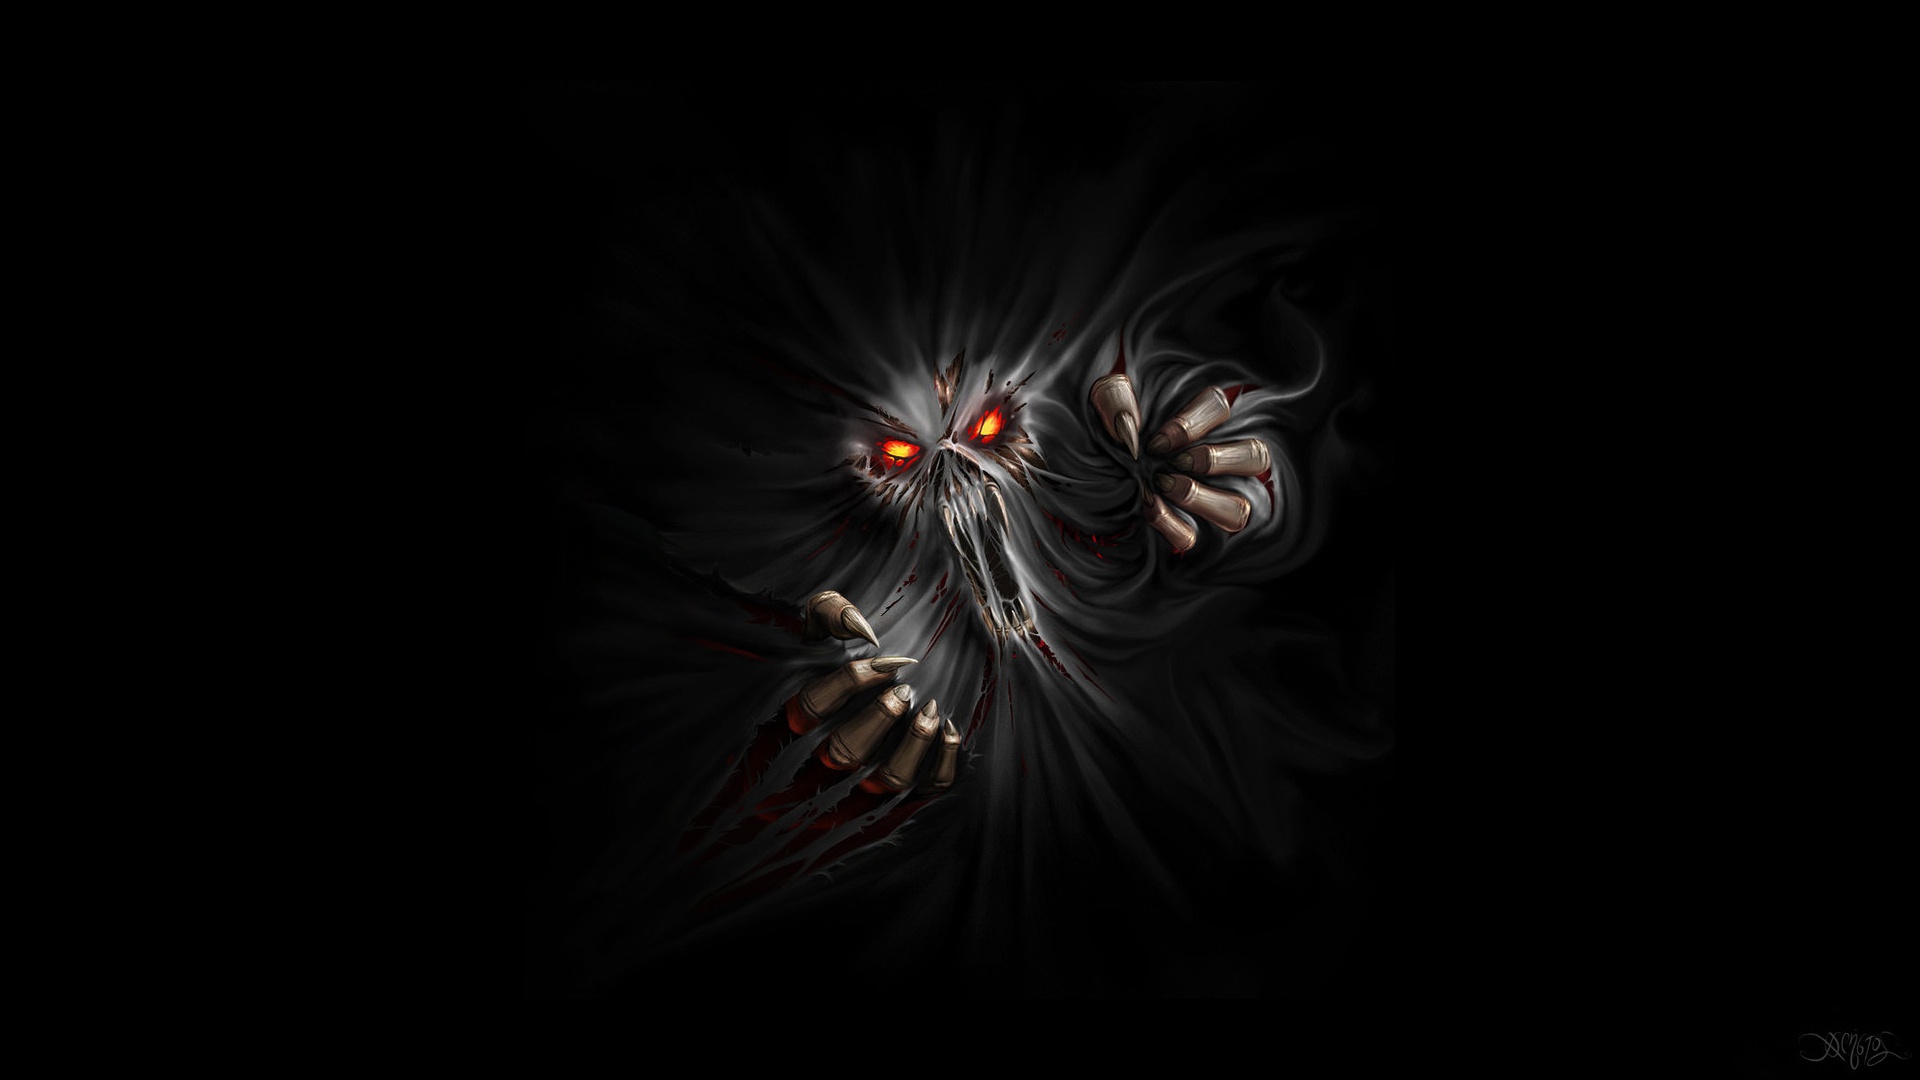 General 1920x1080 fantasy art minimalism simple background demon glowing eyes creature